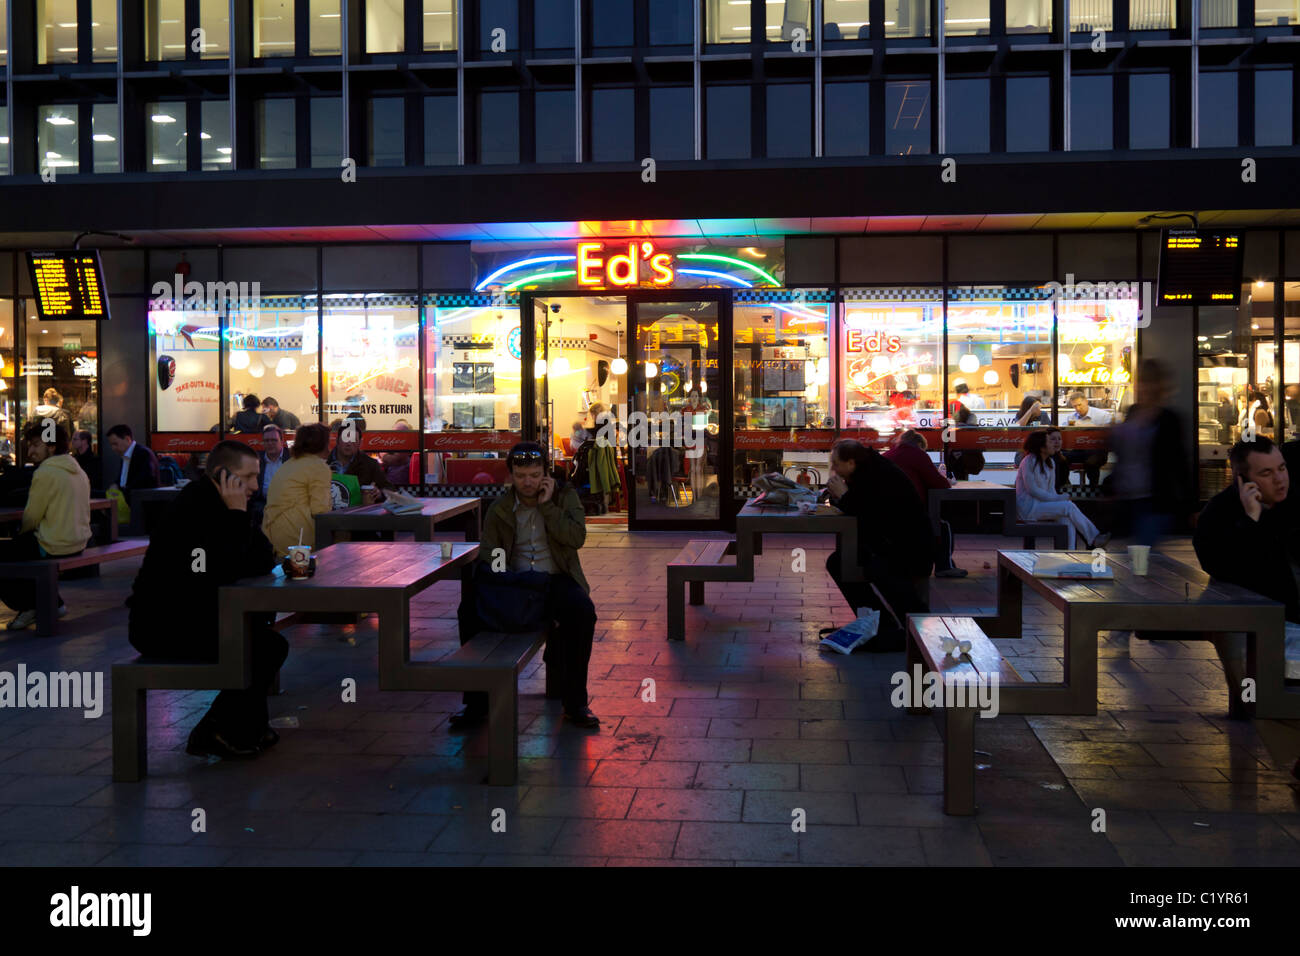 Ed's Diner - Euston Station - London Stock Photo